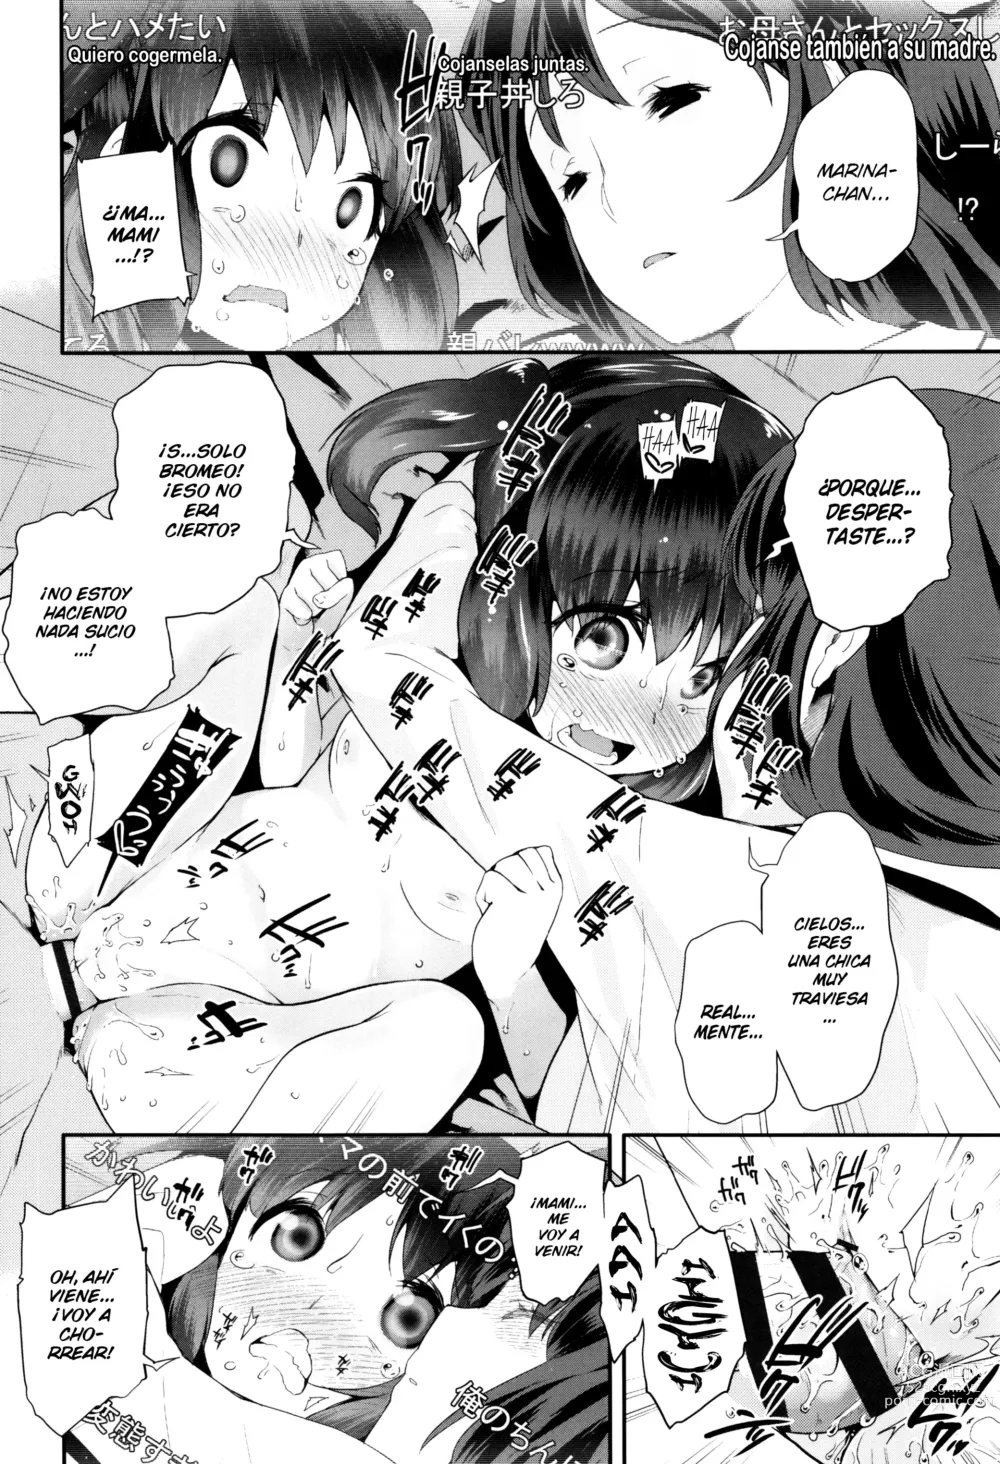 Page 78 of doujinshi Pako Pako Rina Rin 1-4